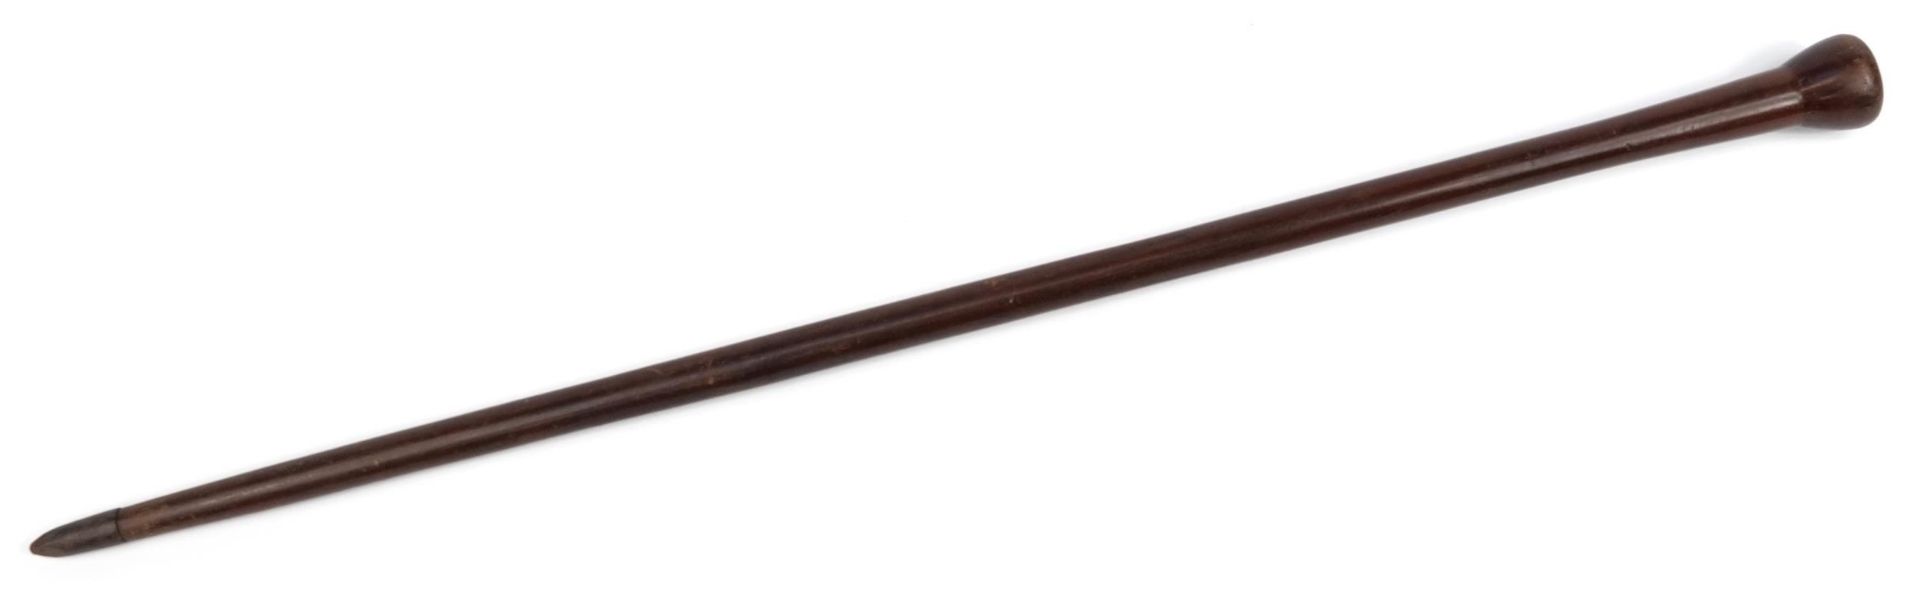 Tribal interest hardwood walking stick, 92cm in length - Image 2 of 3